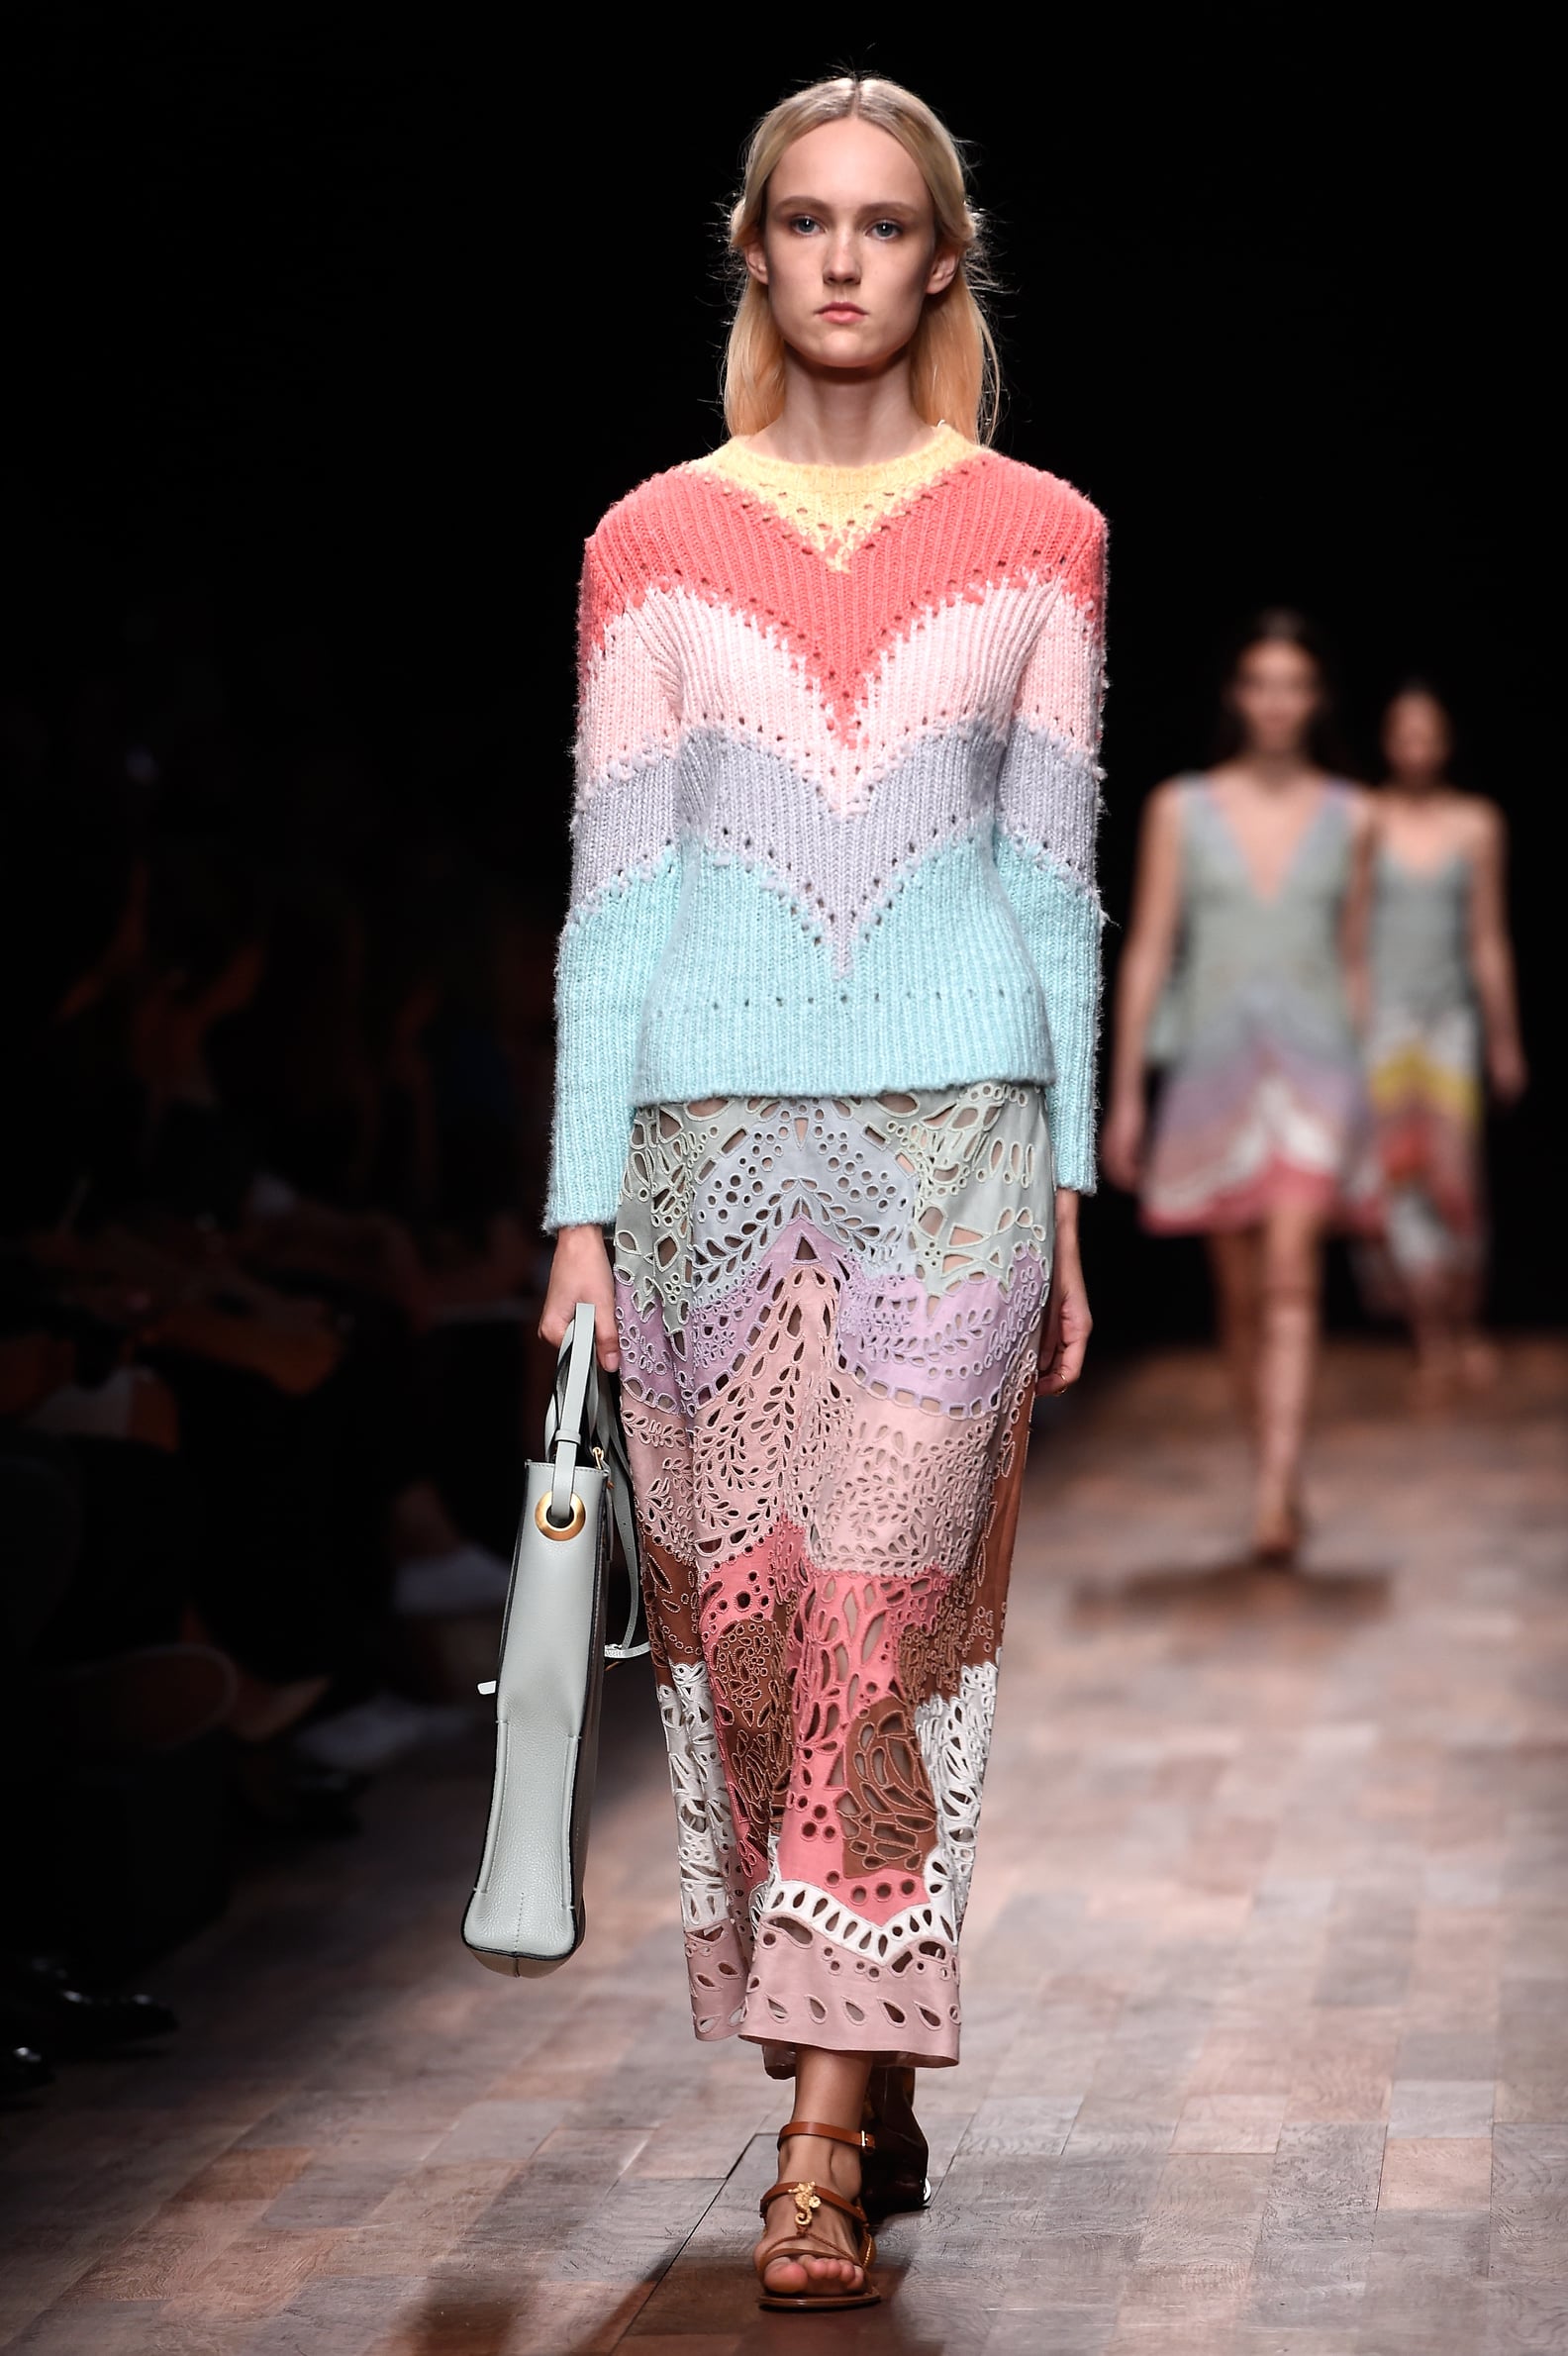 Valentino Spring 2015 Show | Paris Fashion Week | POPSUGAR Fashion